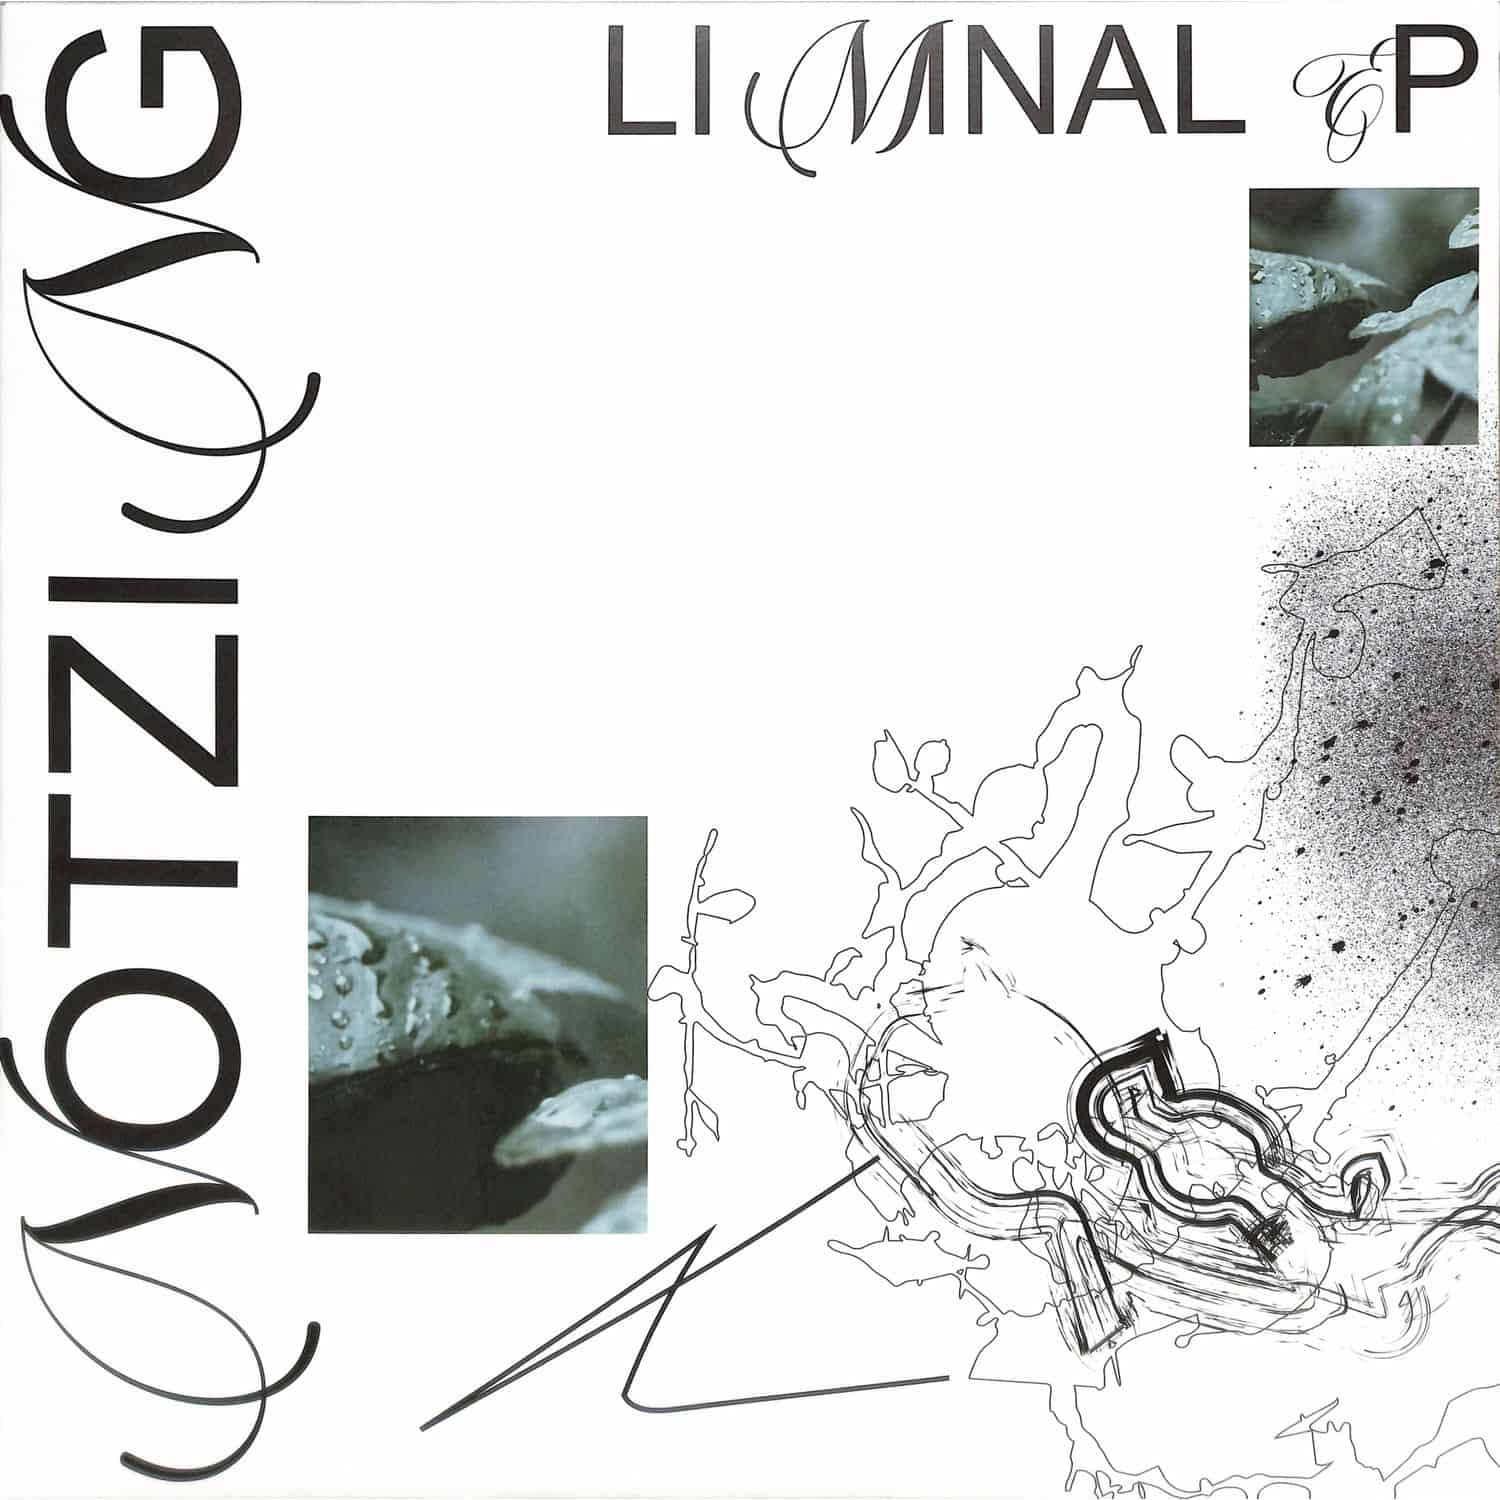 Notzing - LIMINAL EP